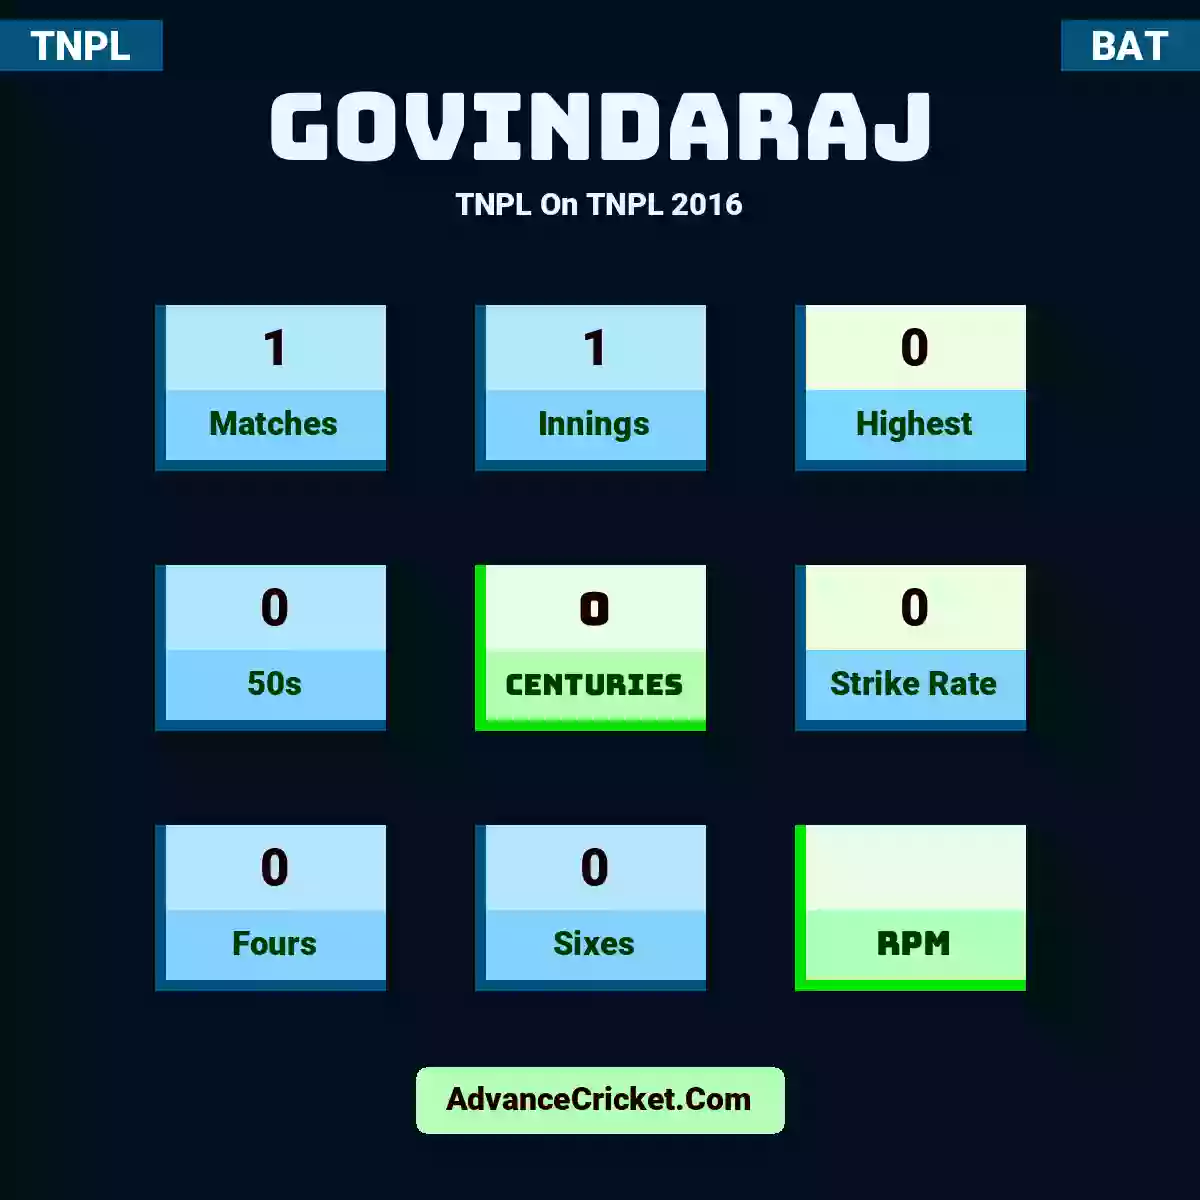 Govindaraj TNPL  On TNPL 2016, Govindaraj played 1 matches, scored 0 runs as highest, 0 half-centuries, and 0 centuries, with a strike rate of 0. G.Govindaraj hit 0 fours and 0 sixes.